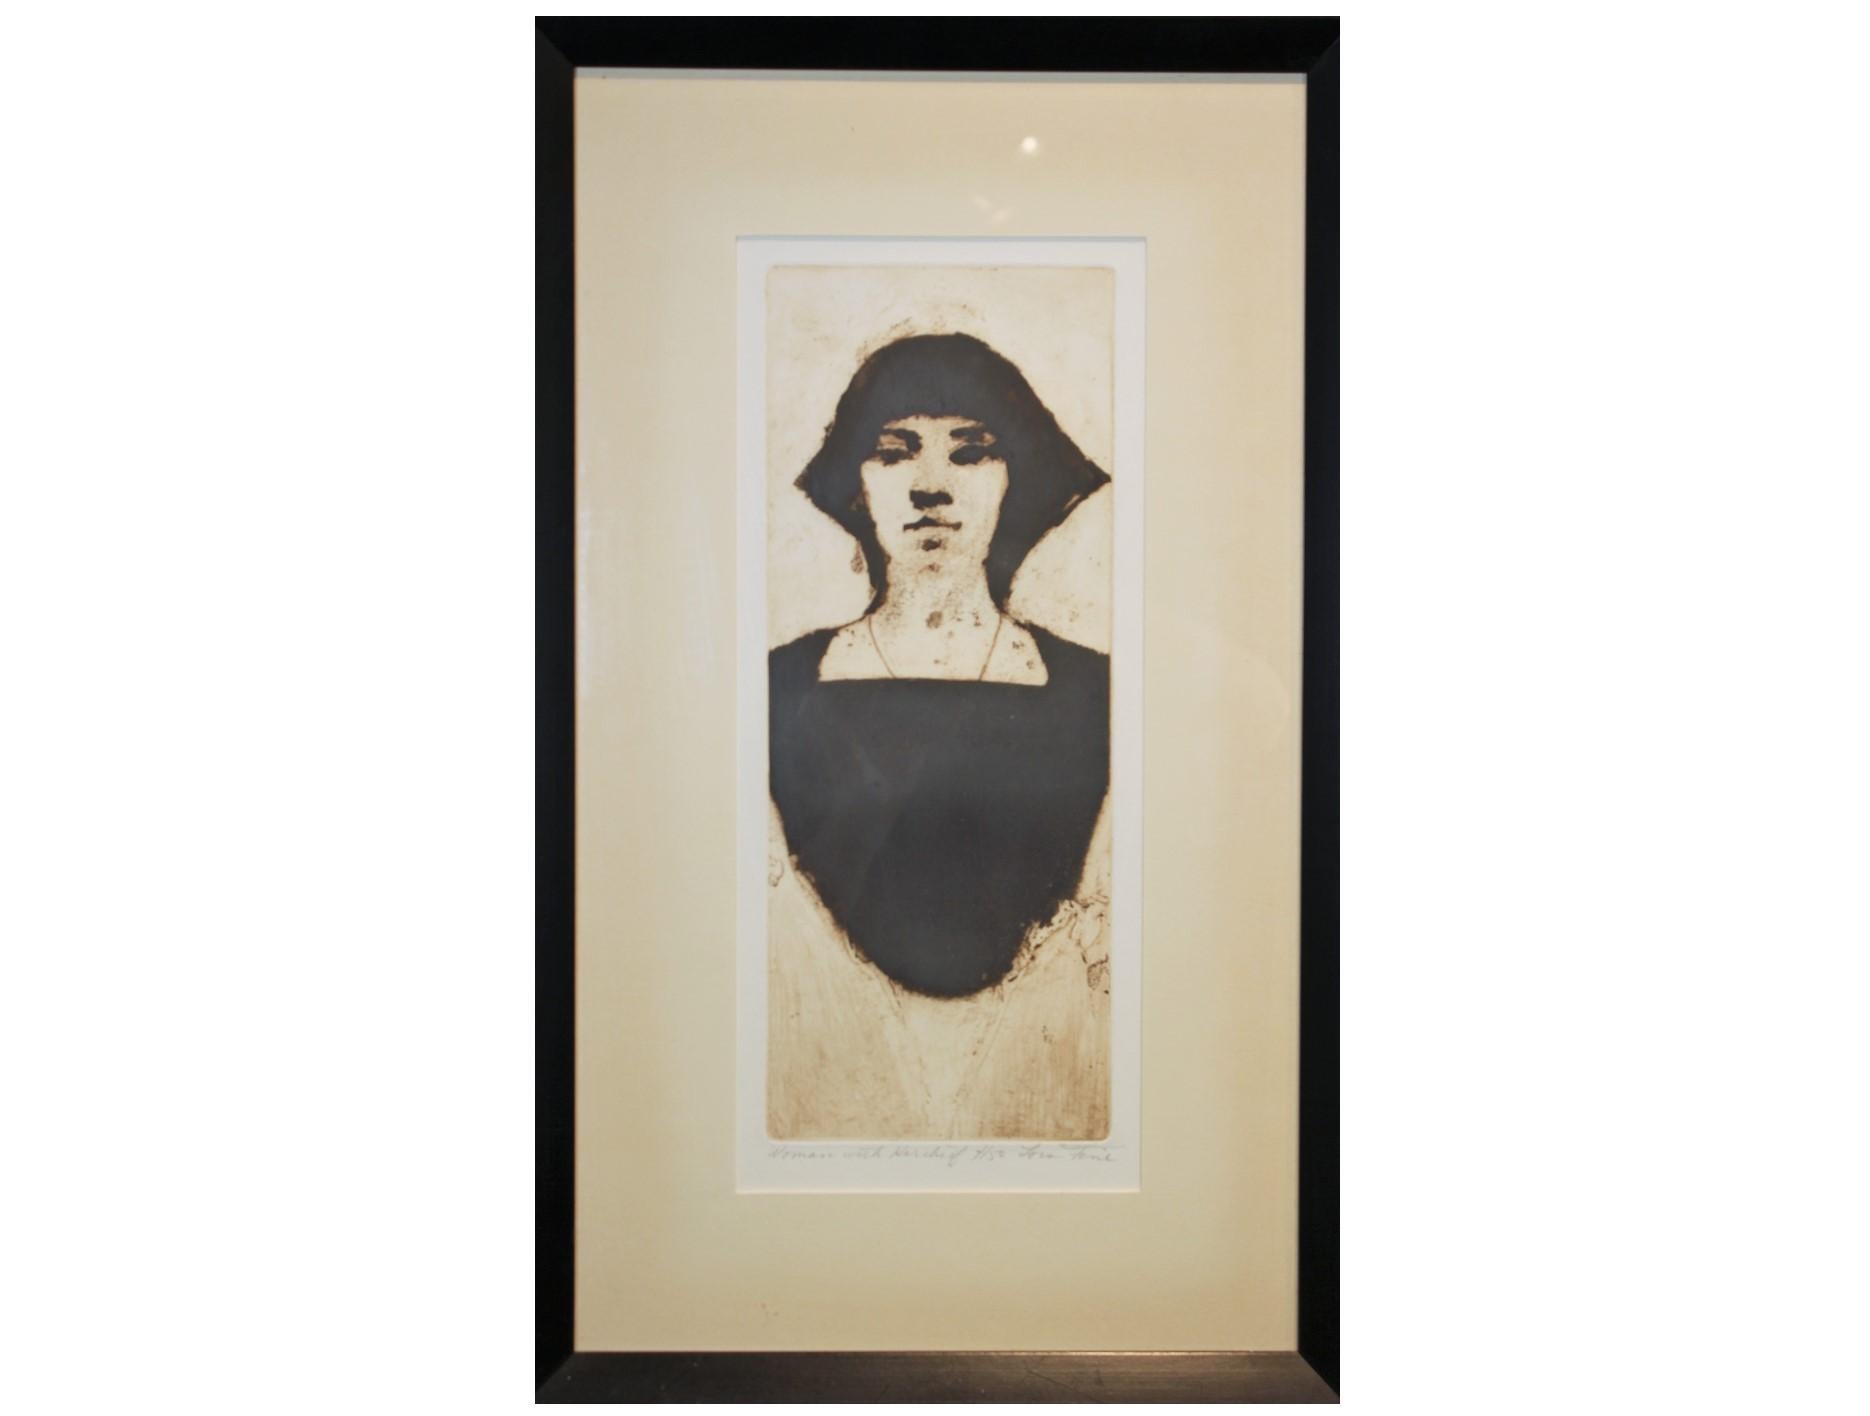 Lois Fine Portrait Print - "Woman with Kerchief" Black and White Portrait Edition 4 of 50